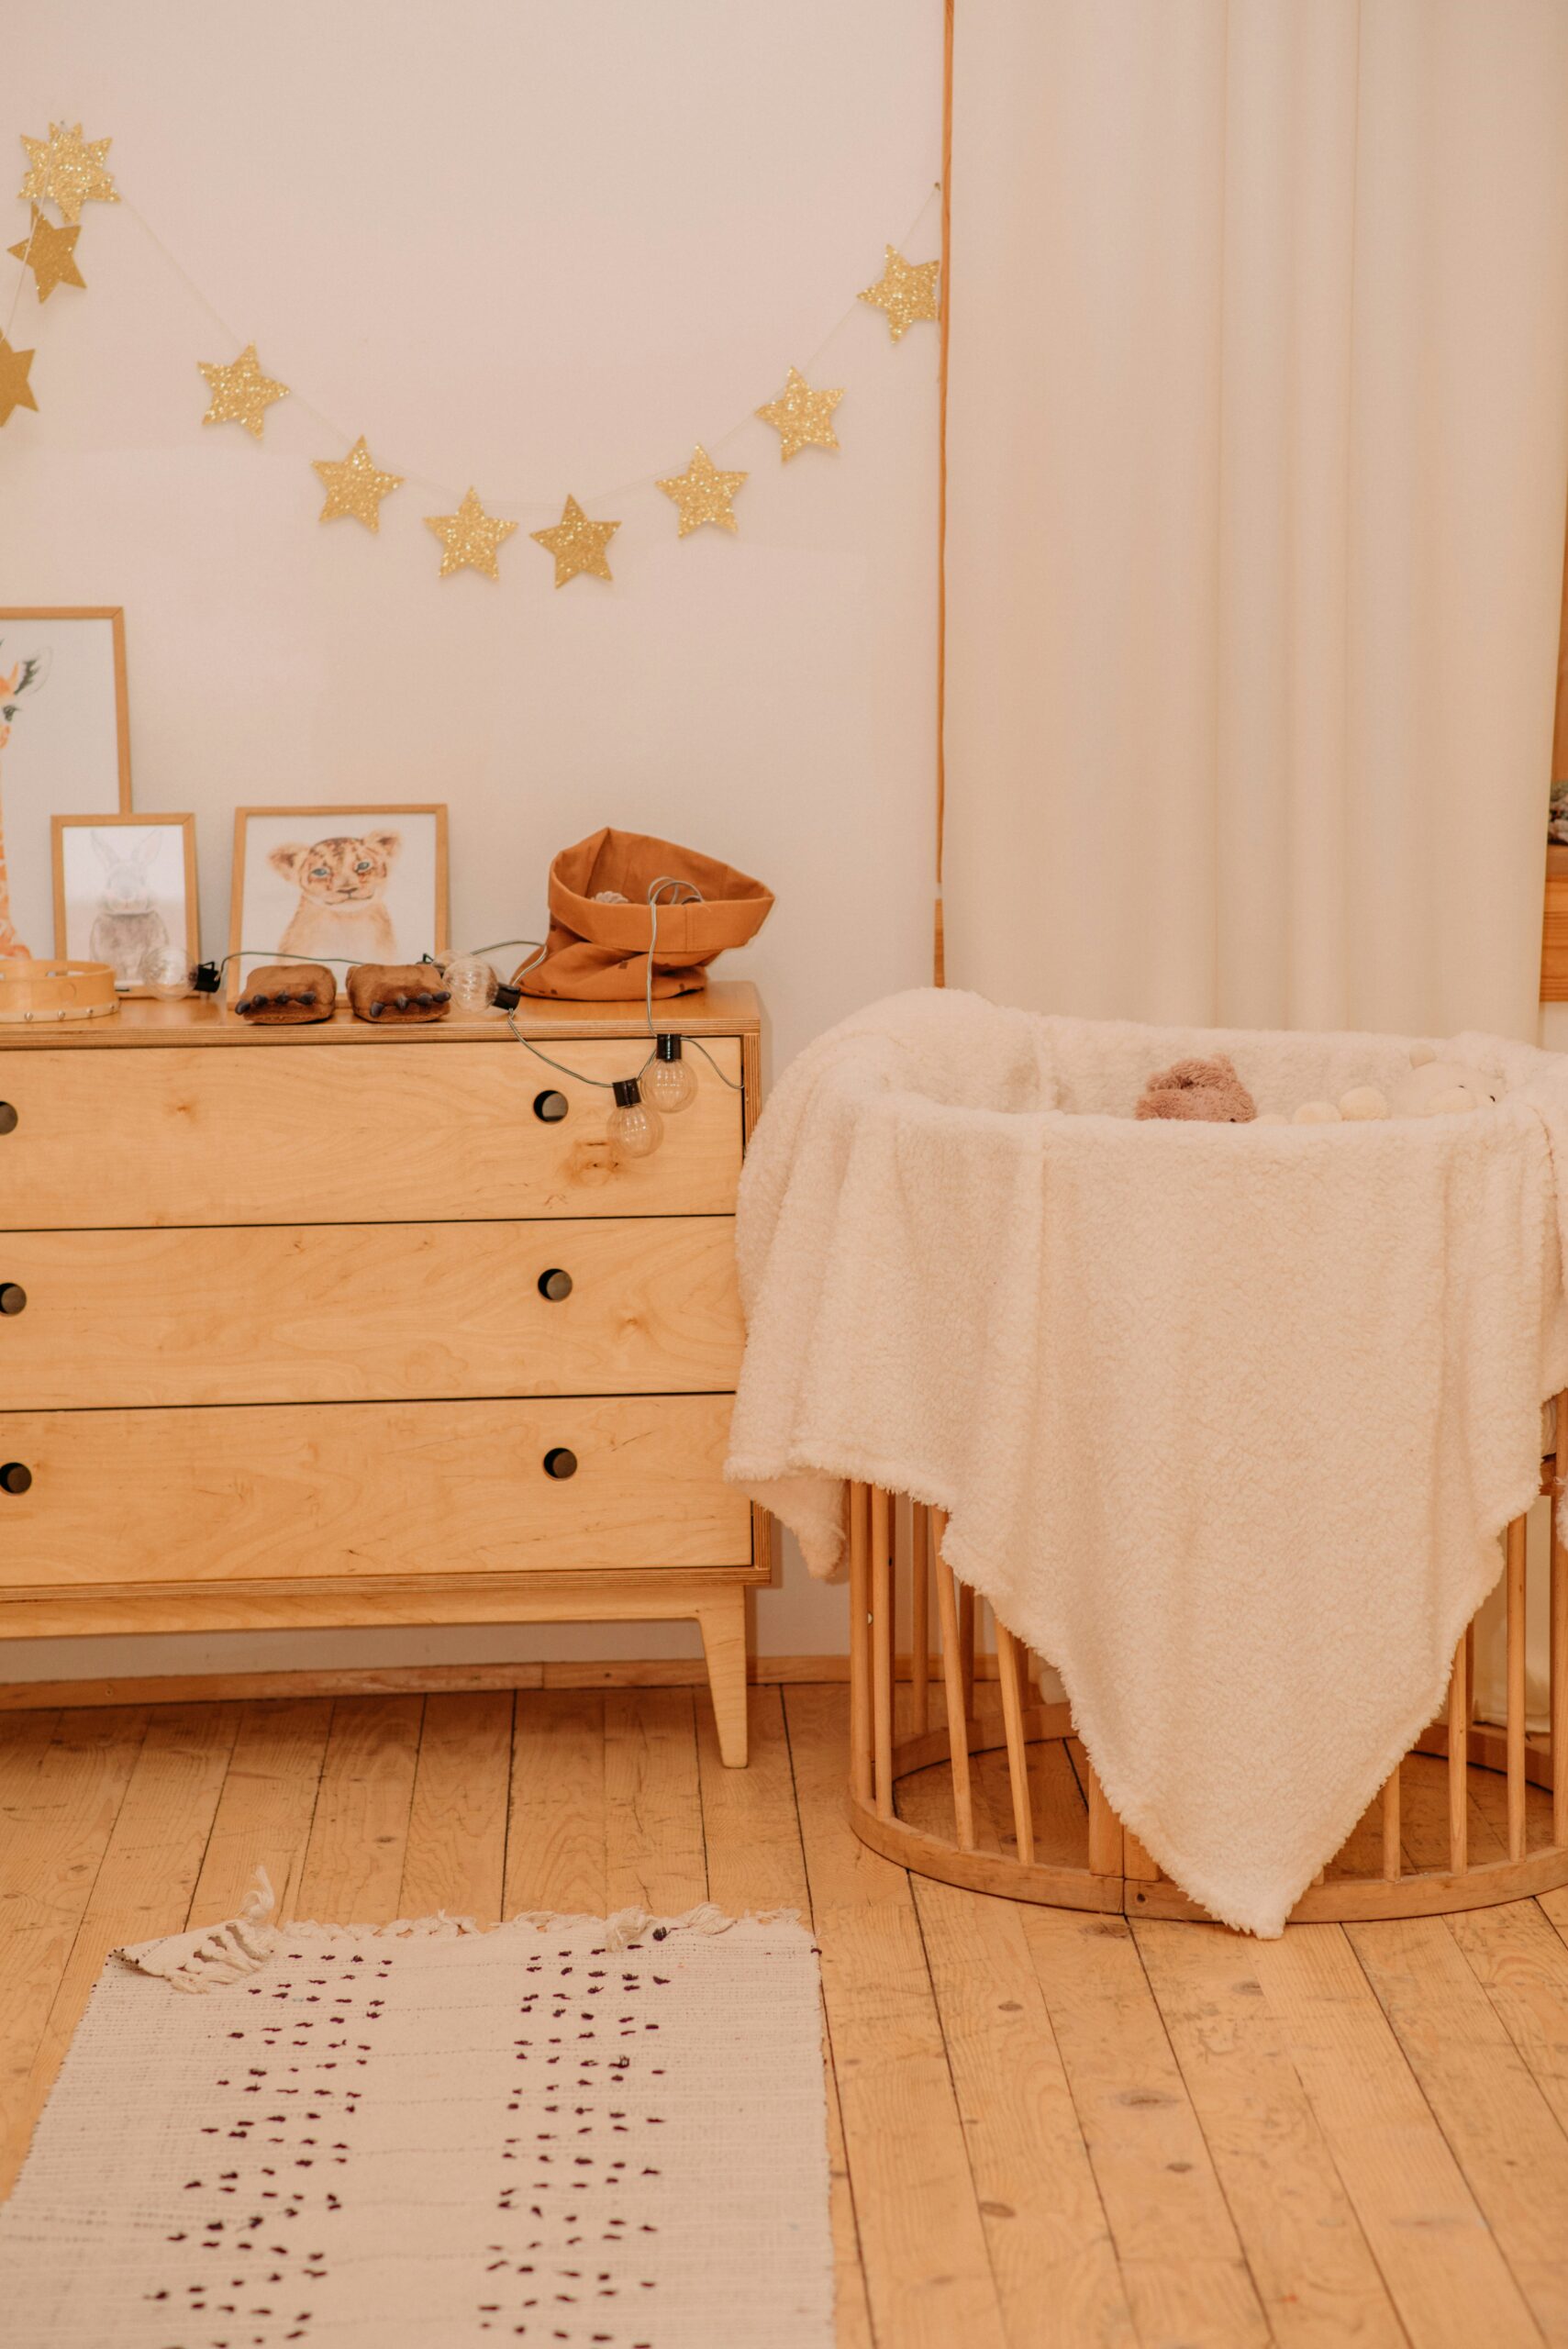 bassinet with wooden dresser in a nursery